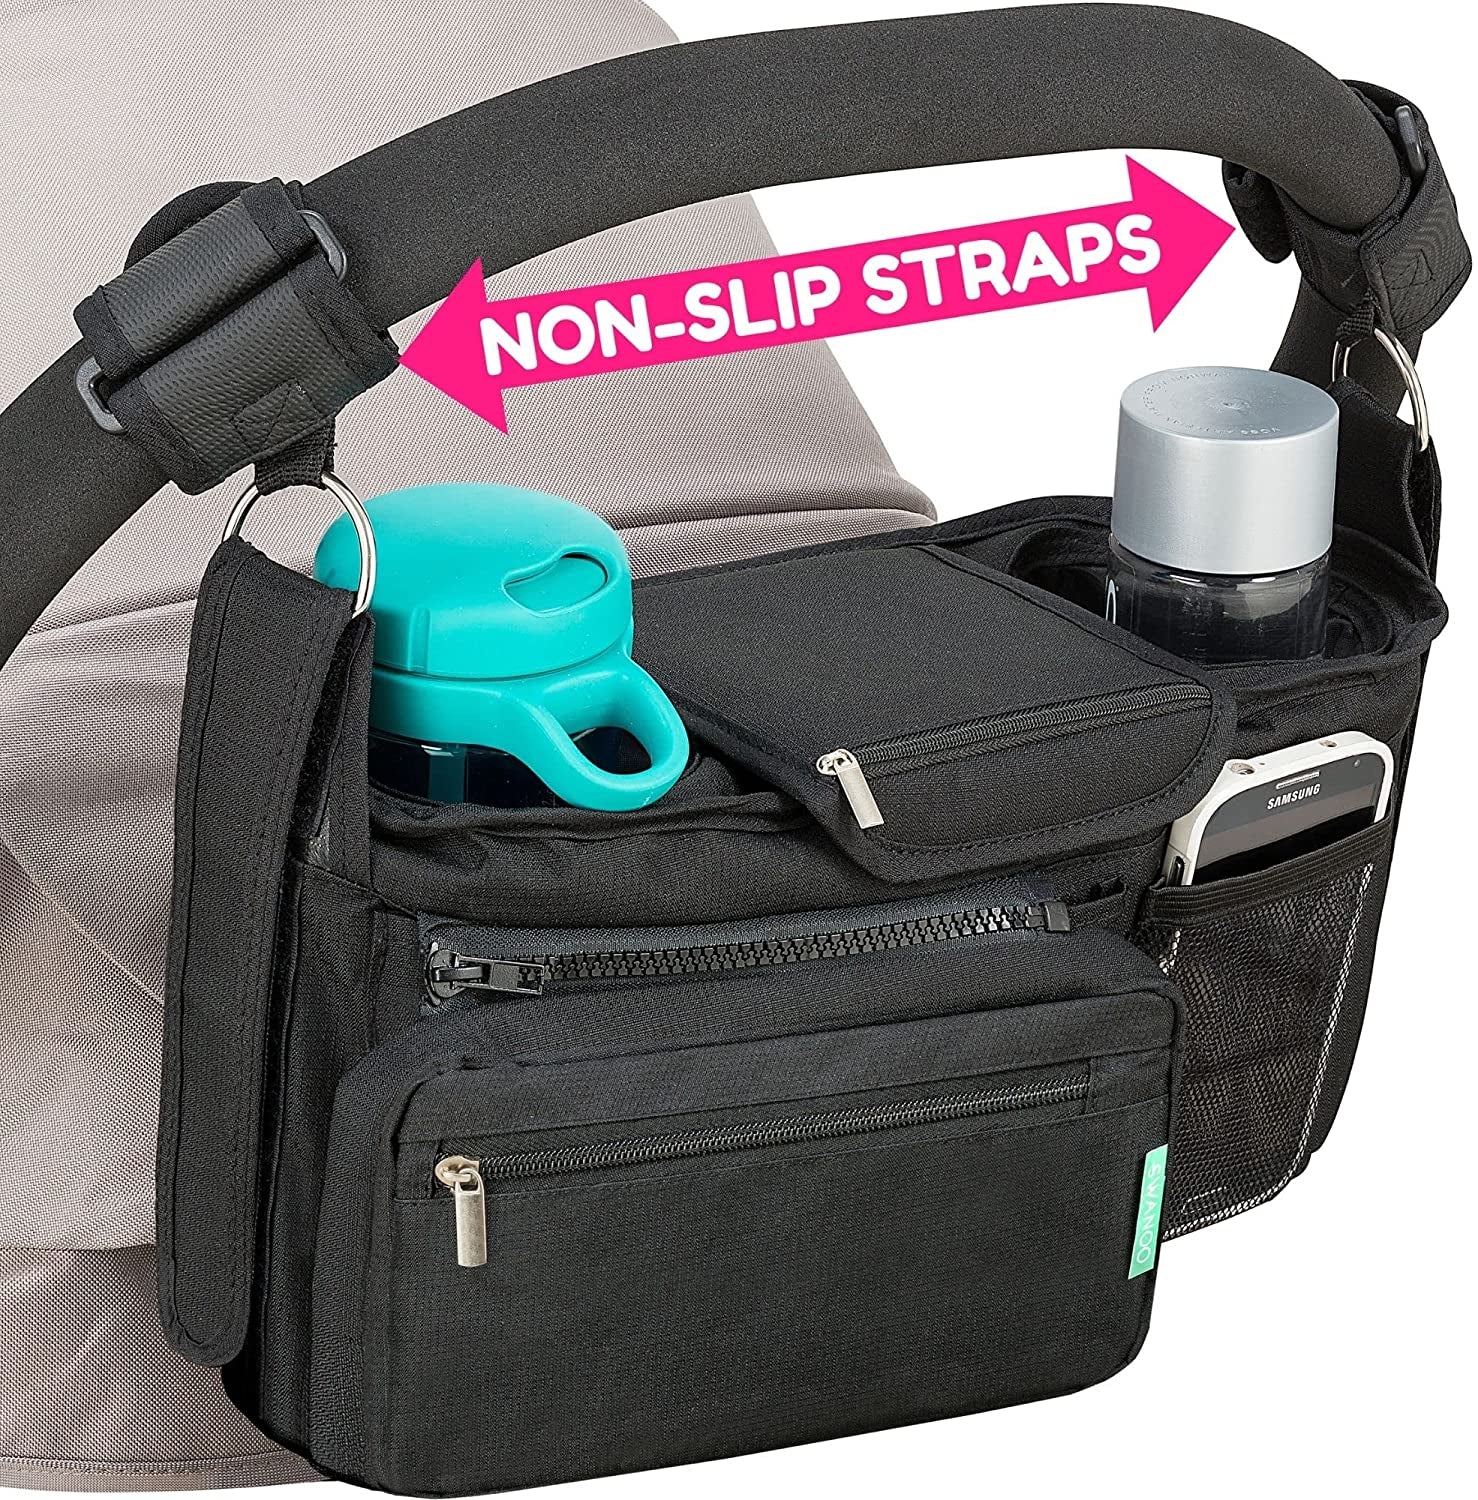 Non-Slip Pram Organiser with Cup Holder, Exclusive Strap Grip Handlebar, Universal Buggy Organiser Bag for Every Model Pushchair and Stroller